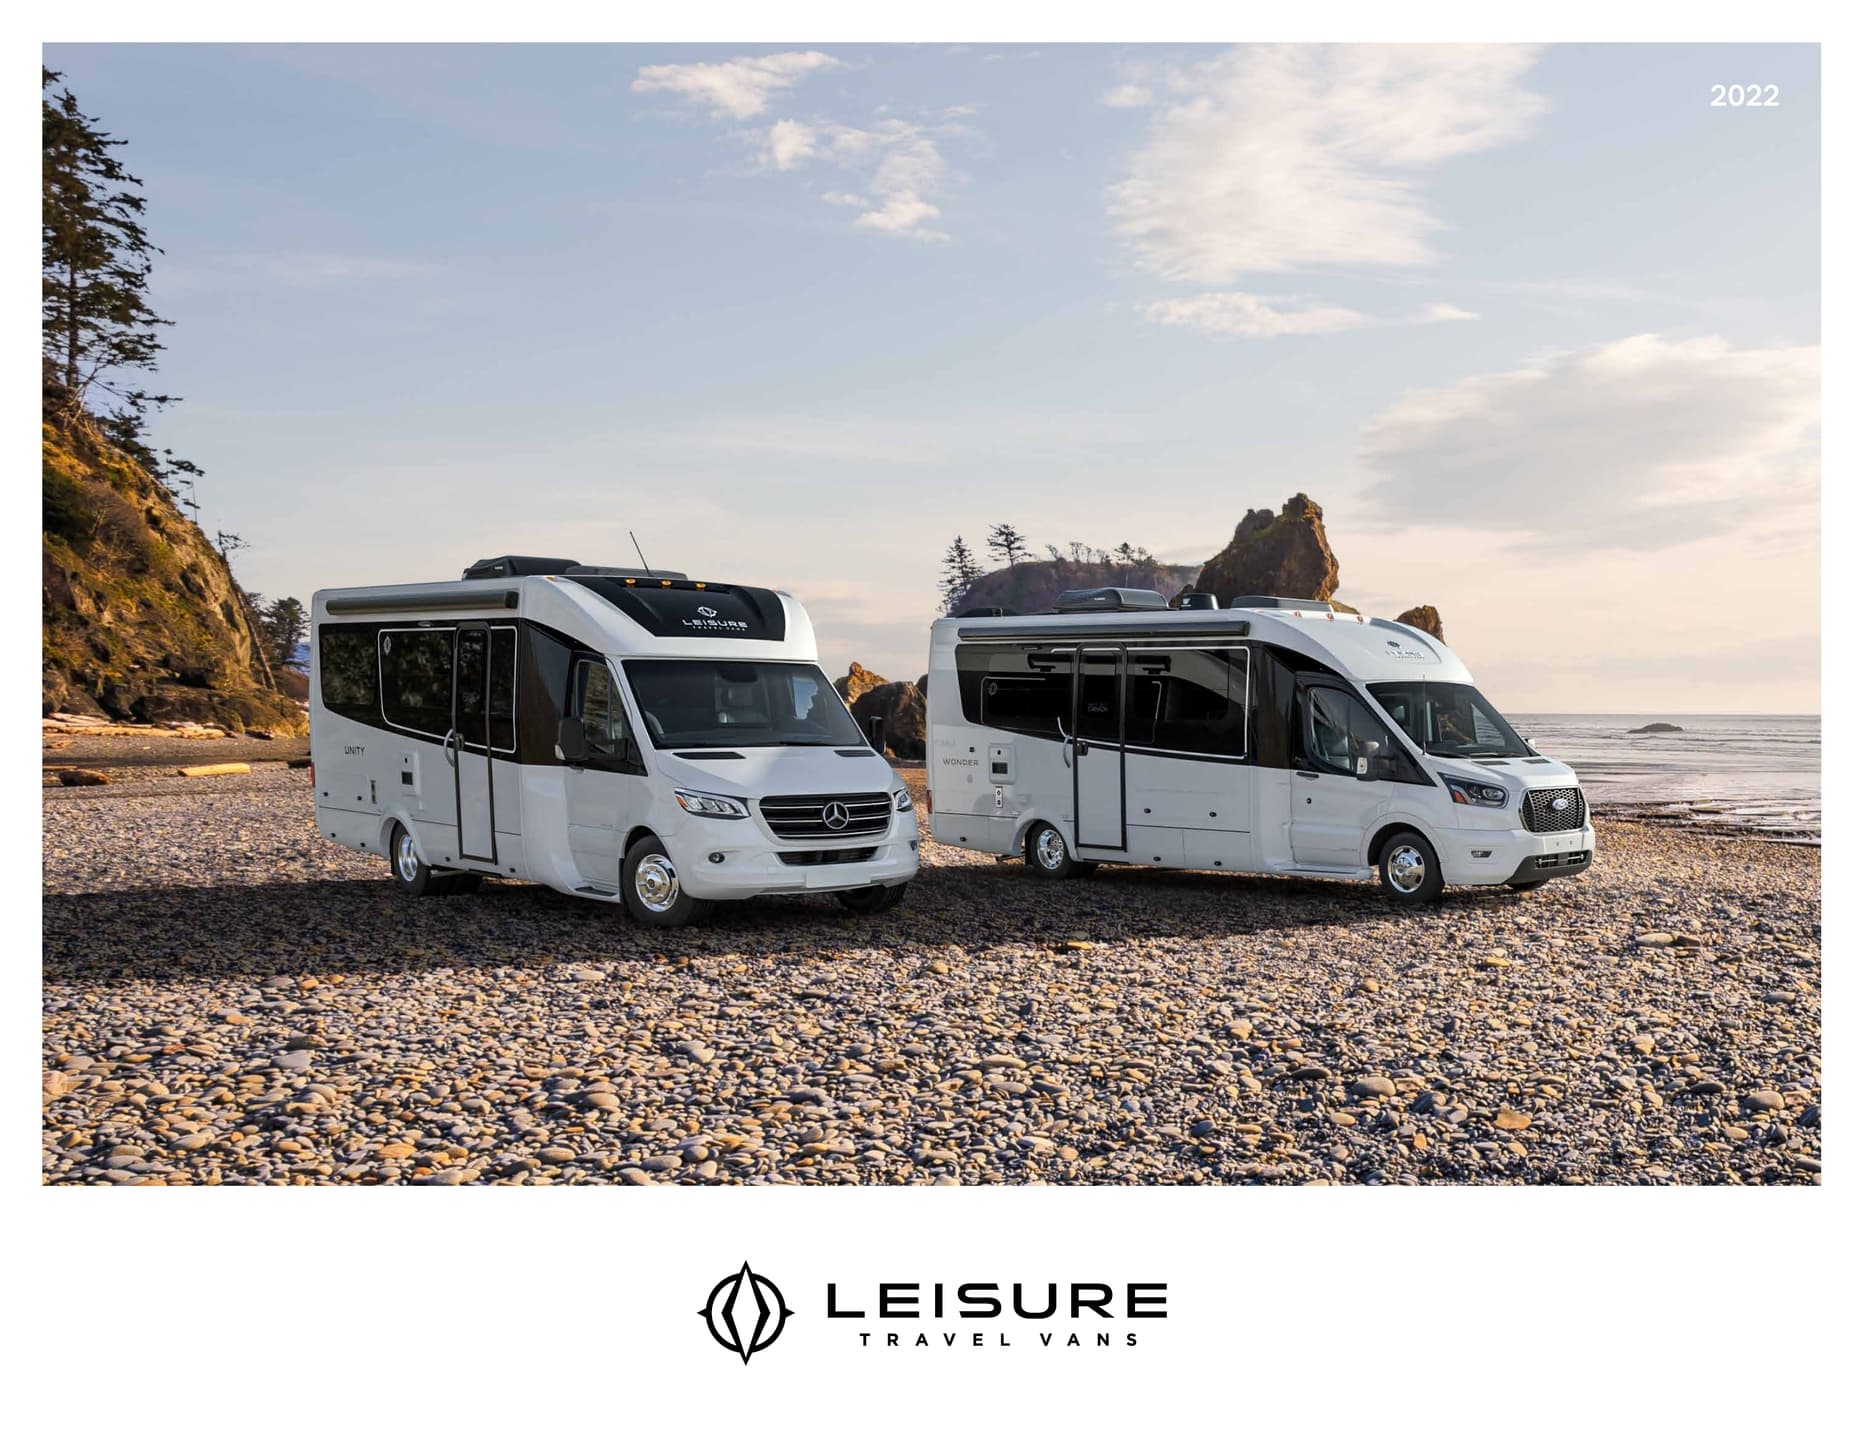 leisure travel vans locations